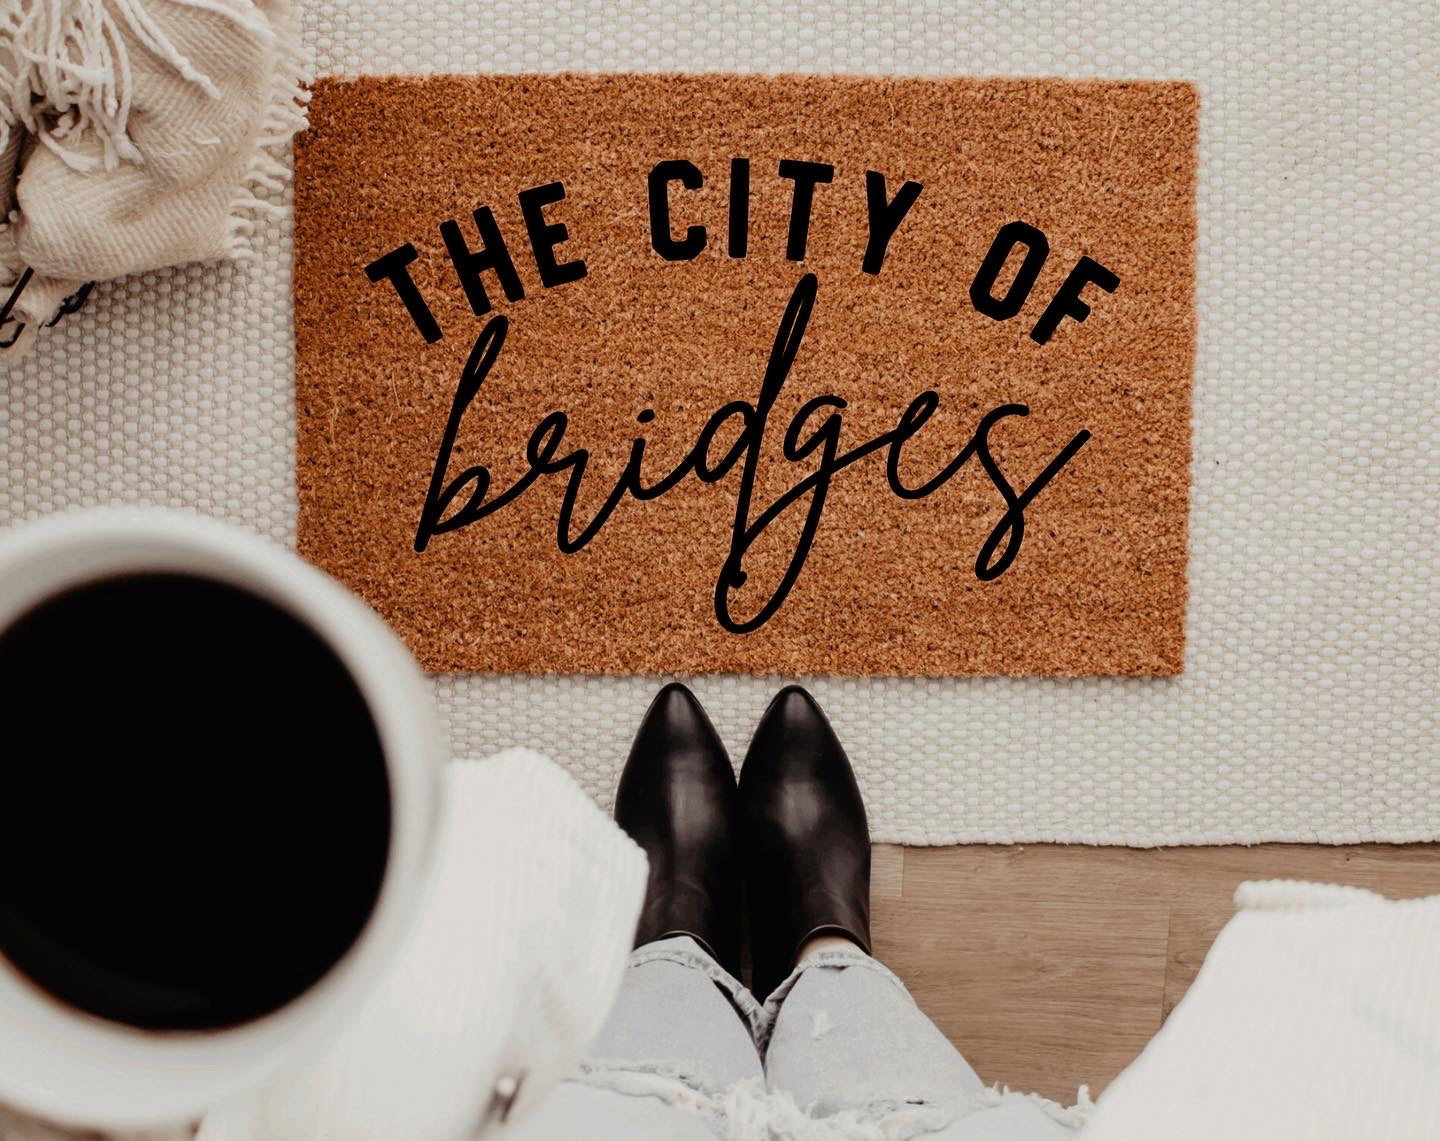 The City Of Bridges